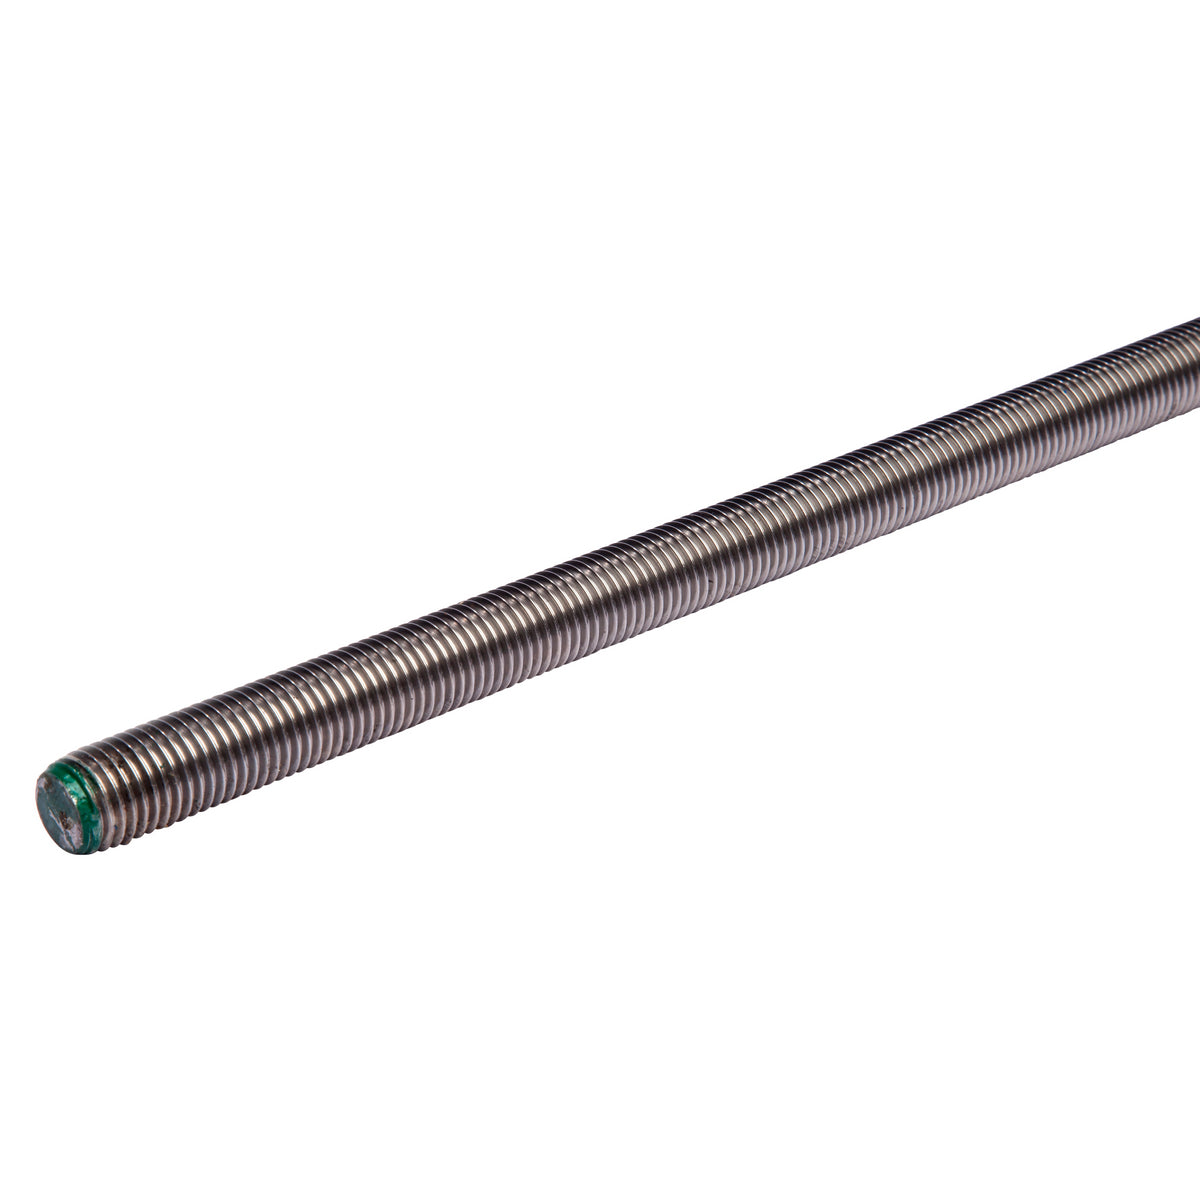 Stainless Steel Threaded Bar - M20 x 1 m